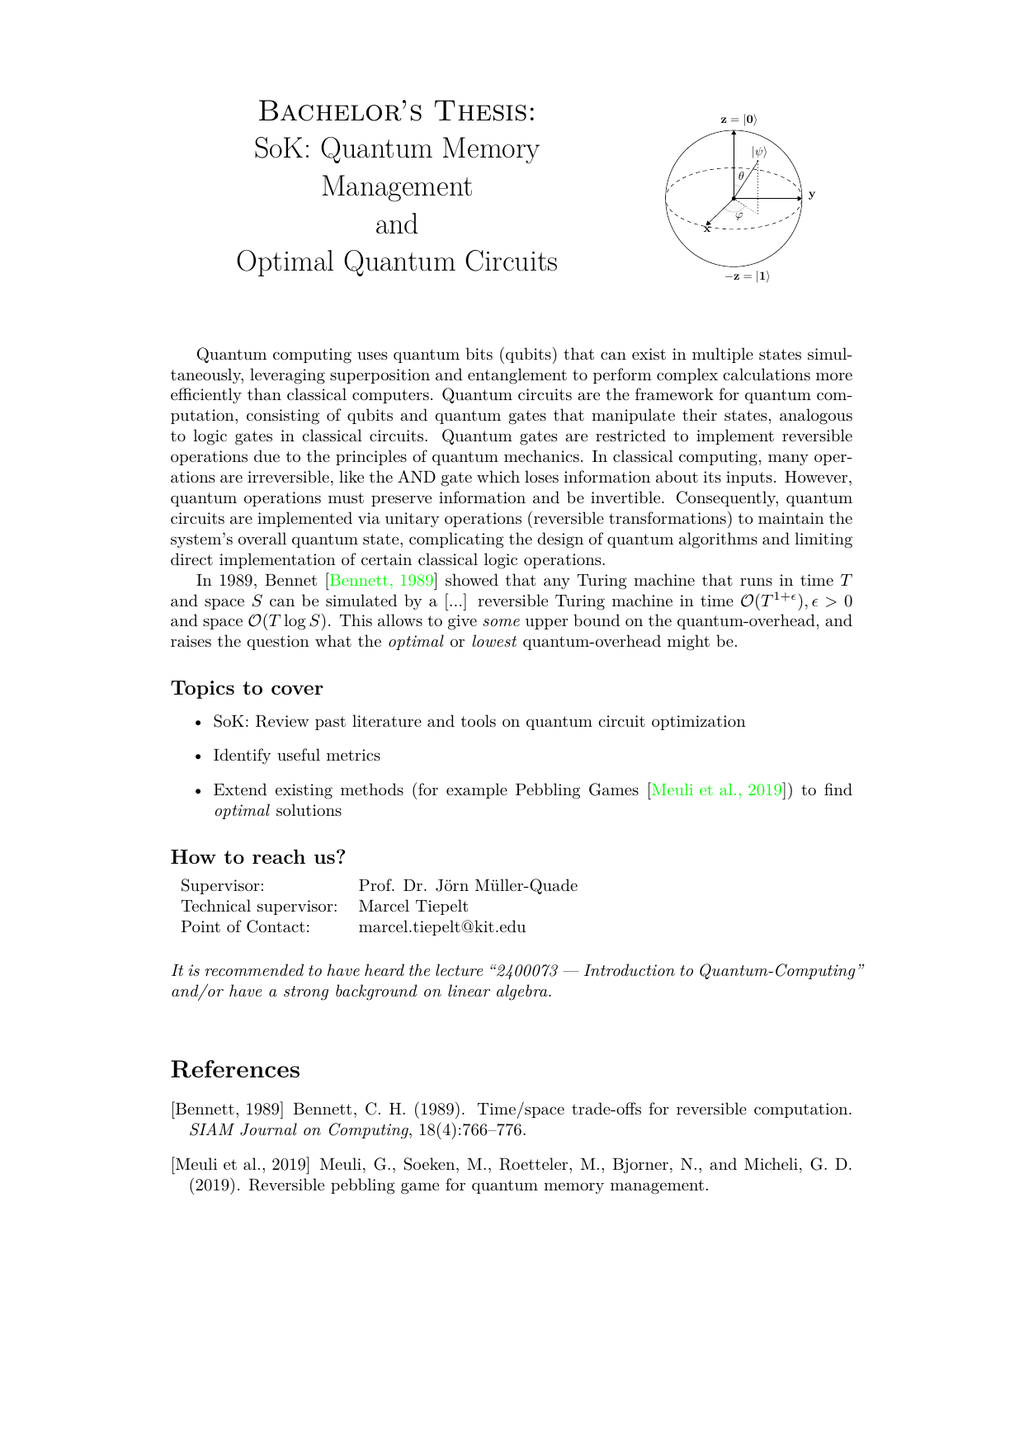 [BA] SoK: Quantum Memory Management and Optimal Quantum Circuits